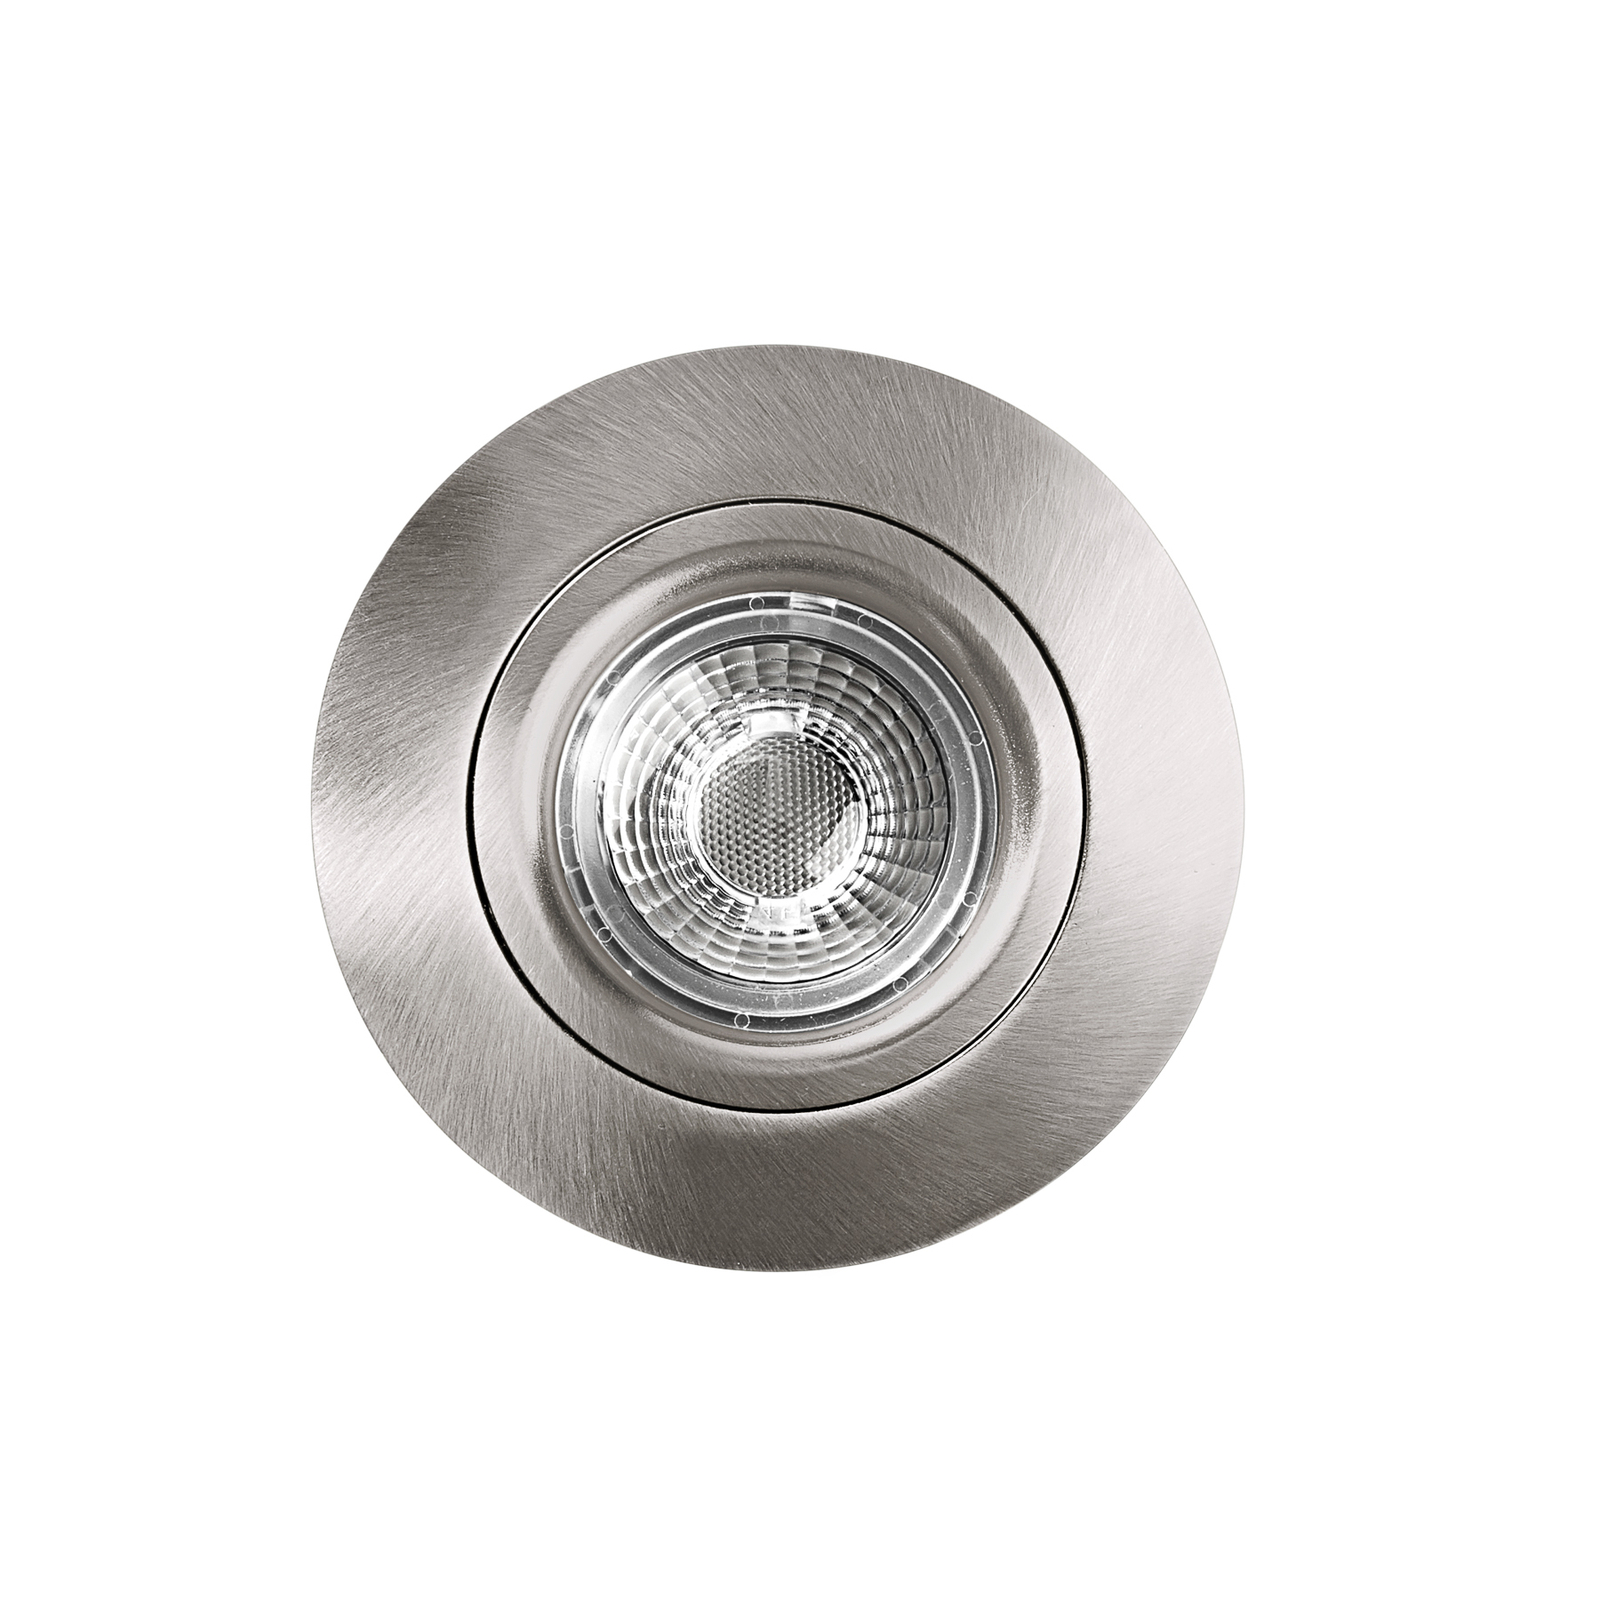 DL6809 LED downlight, round, nickel